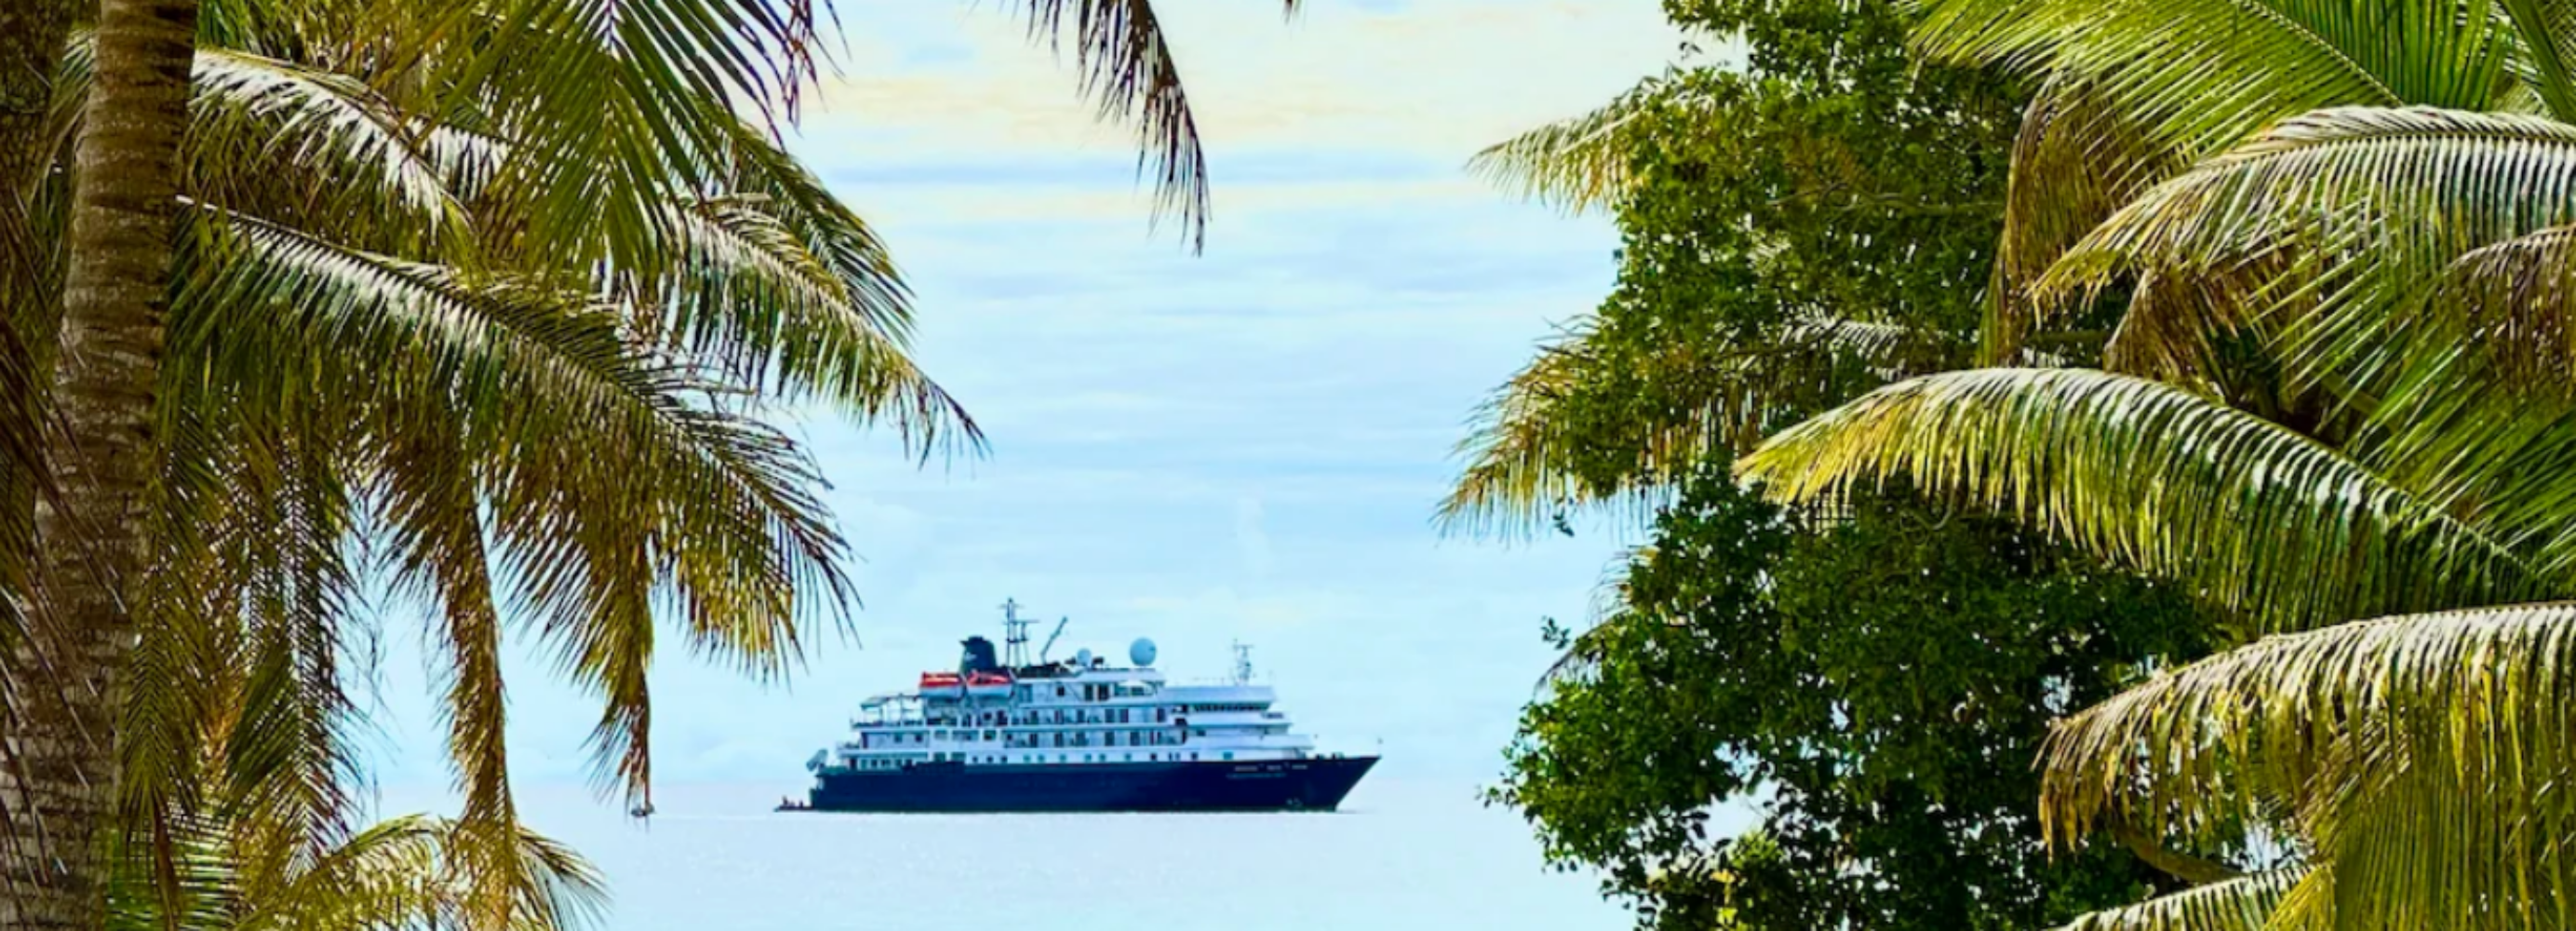 Captain Cook Fiji Expedition ship